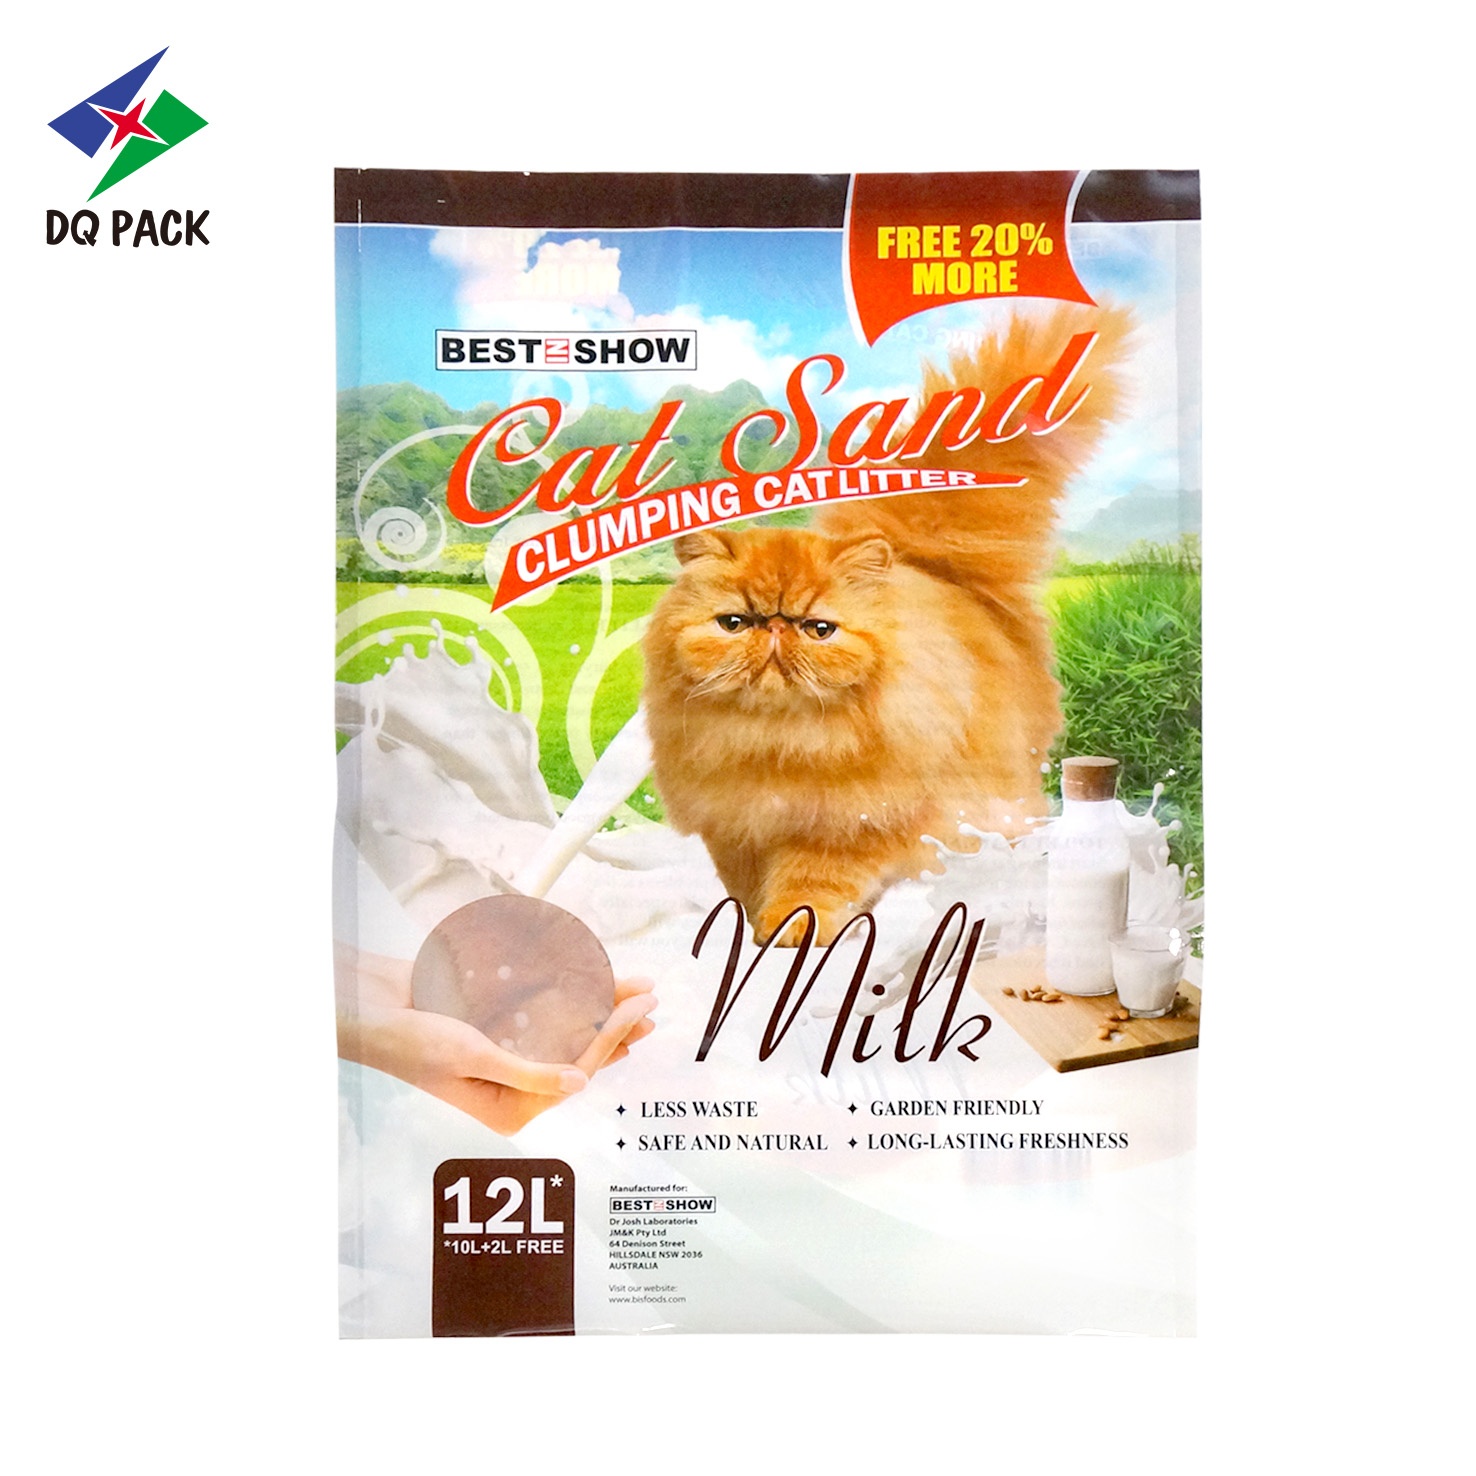 DQ PACK Wholesale Plastic Mylar Bag Large Capacity 1kg 5kg 12kg Packaging three side seal bags for cat litter